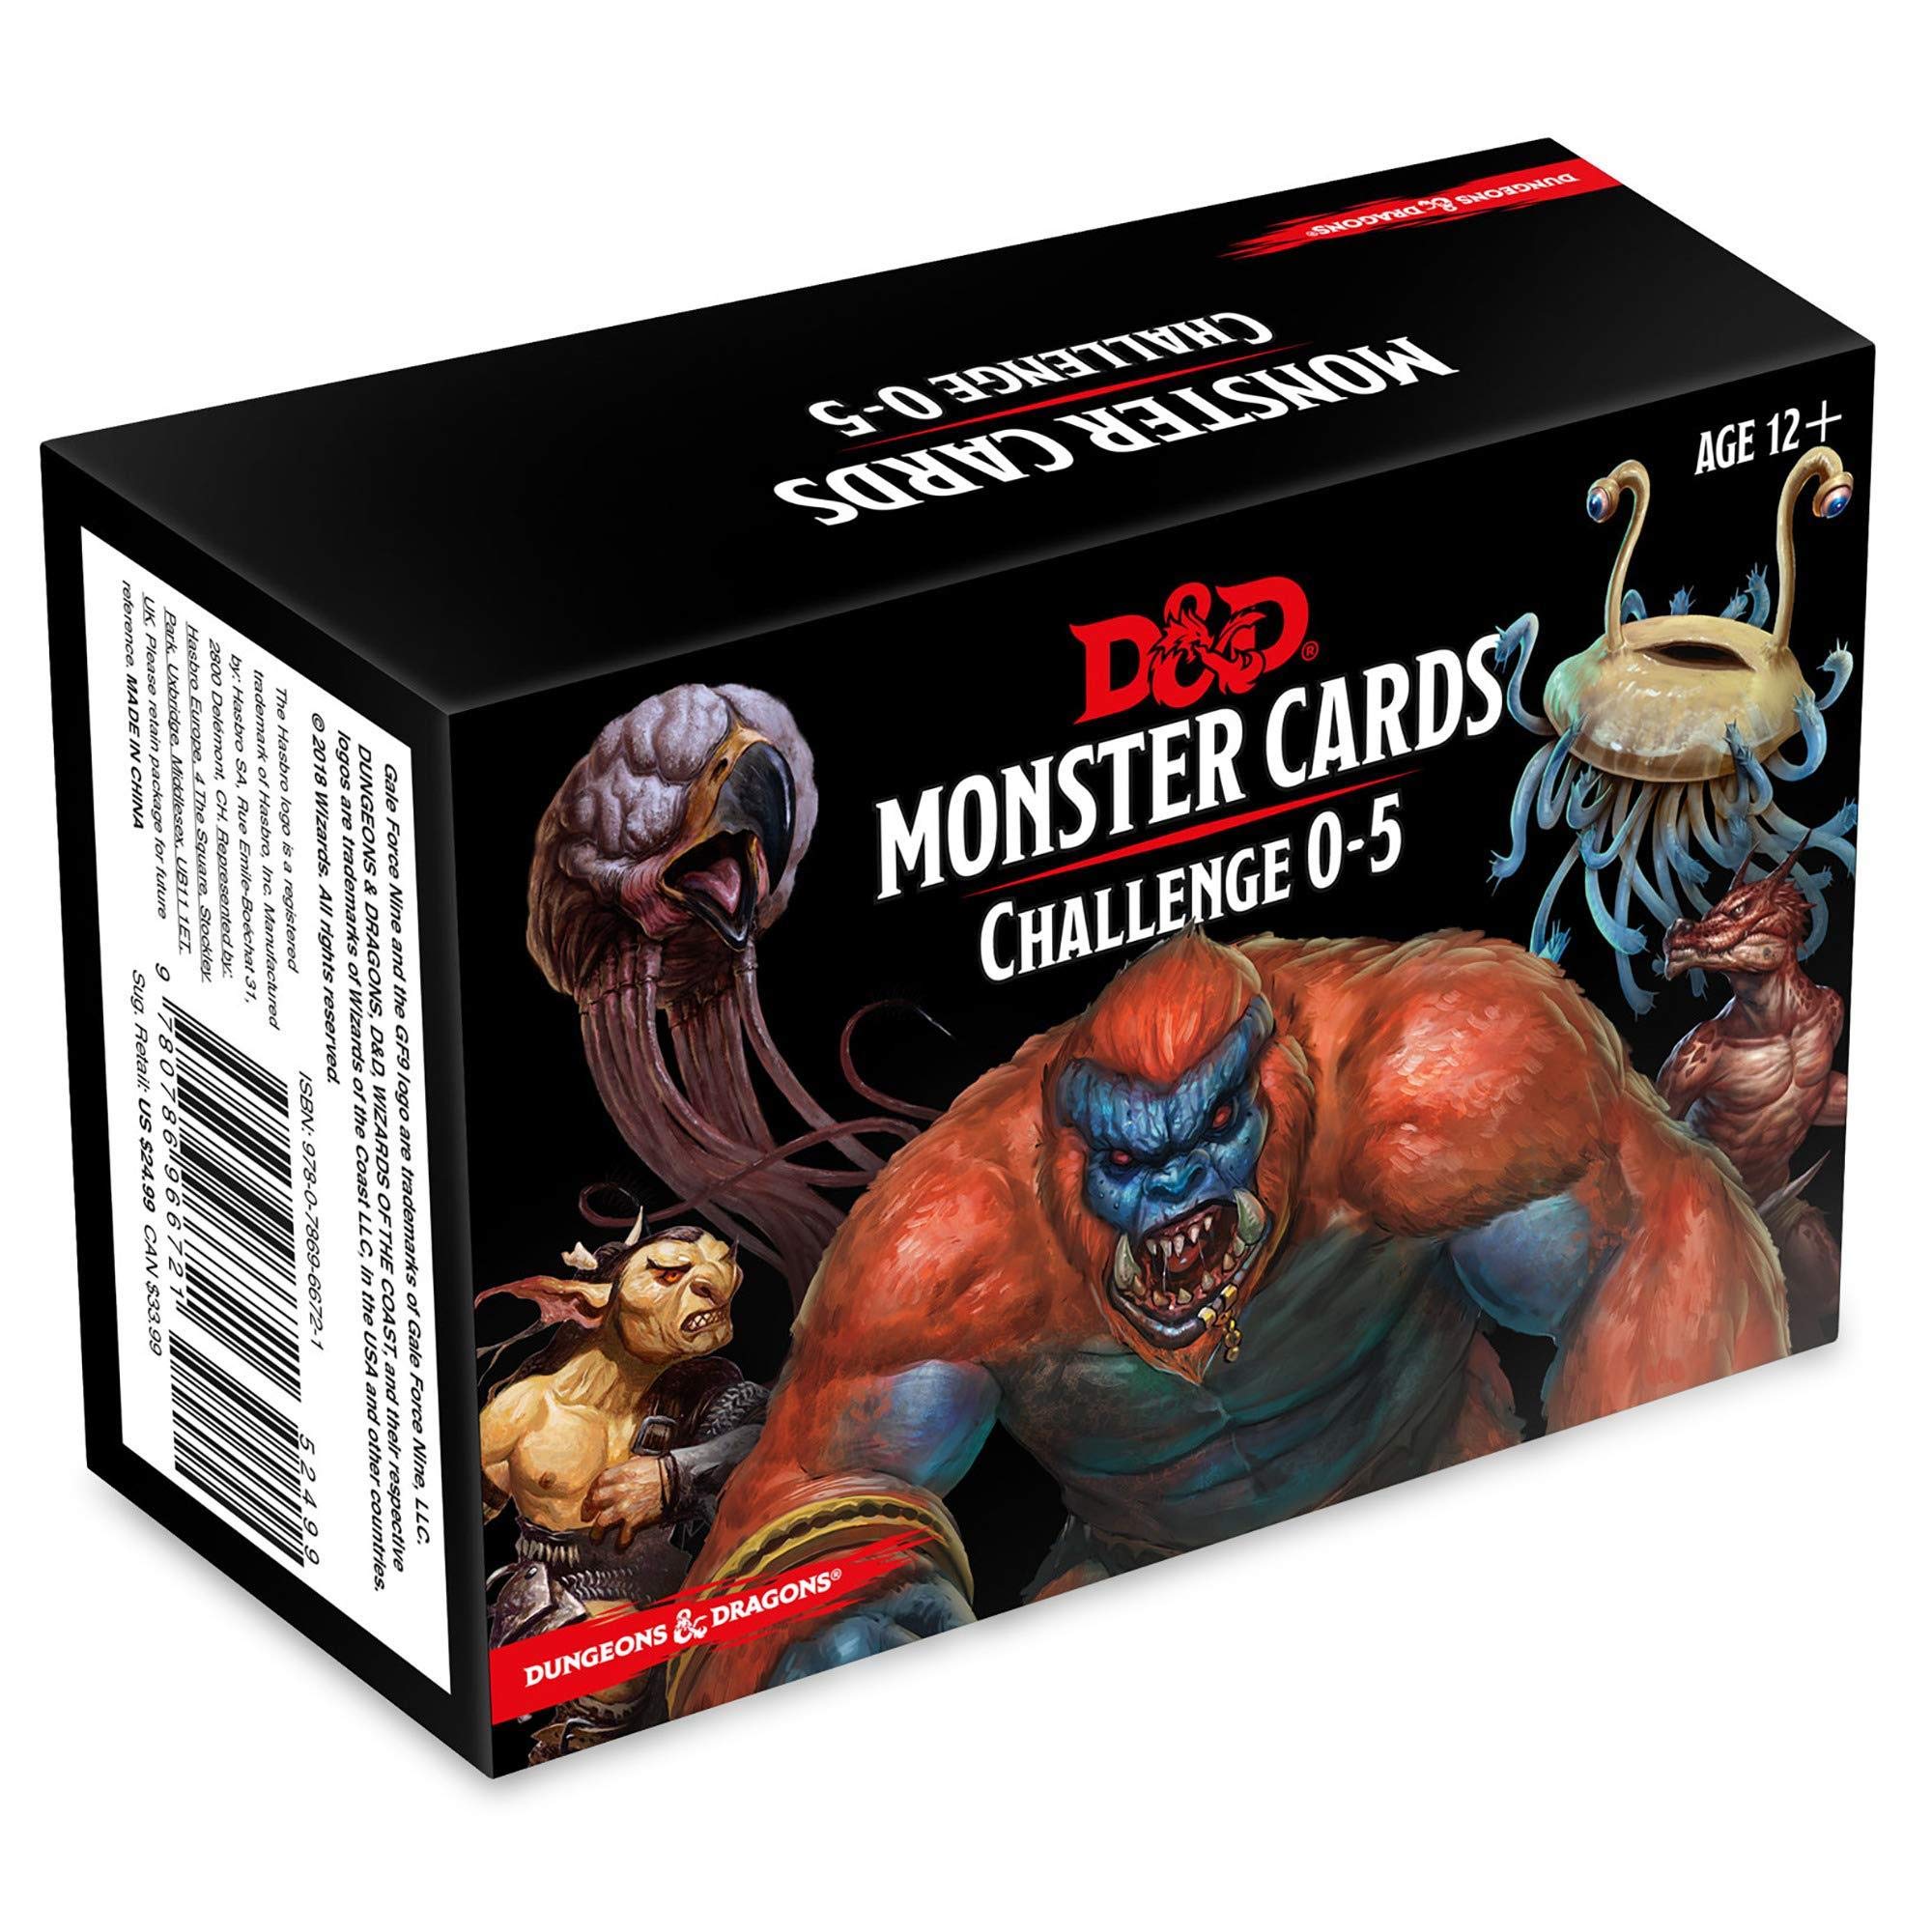 Challenge 0-5 Monster Cards